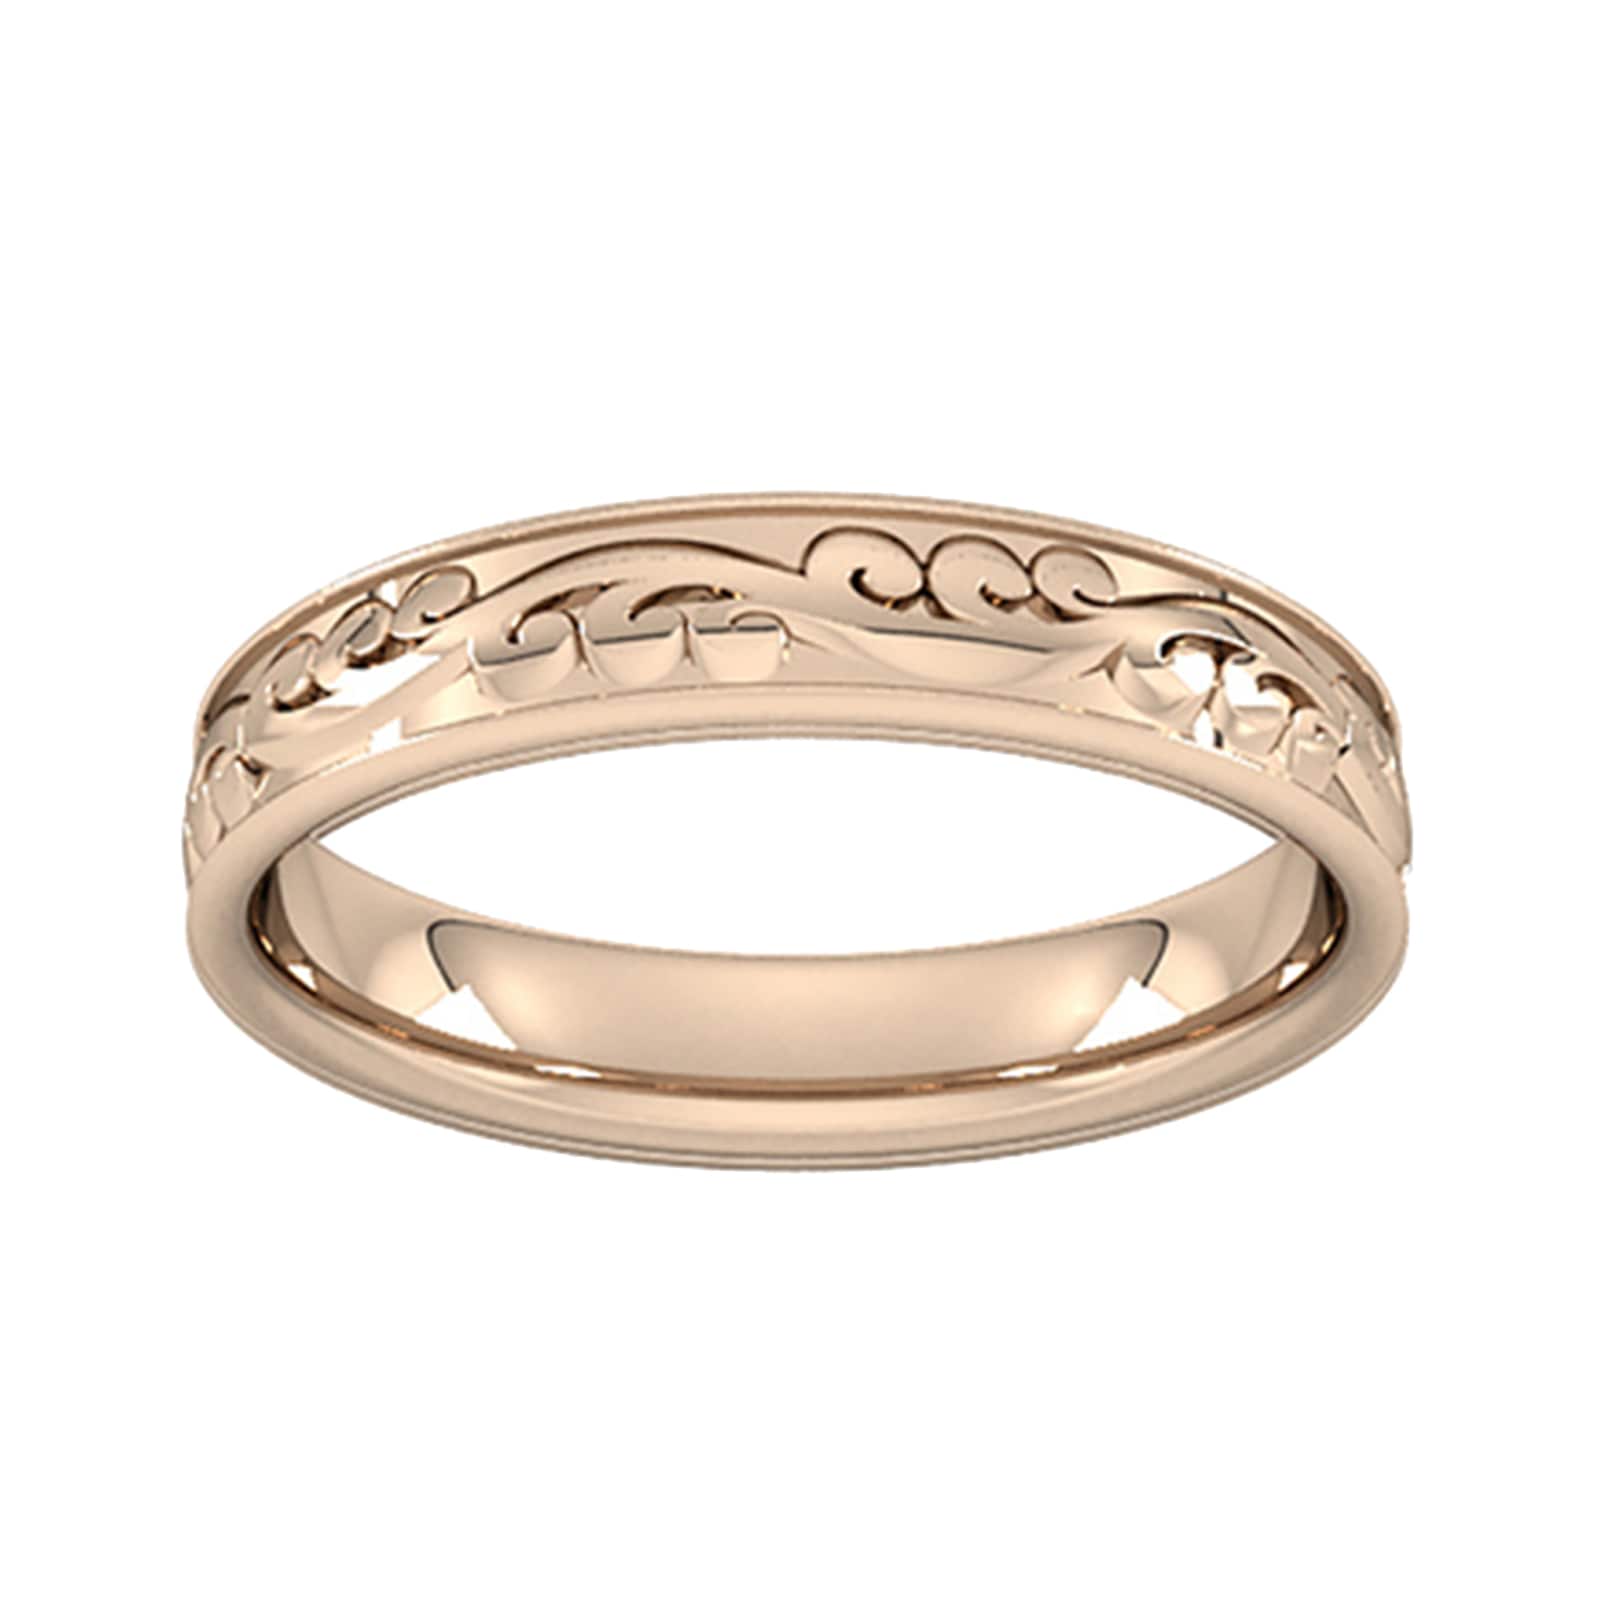 4mm Hand Engraved Wedding Ring In 18 Carat Rose Gold - Ring Size U